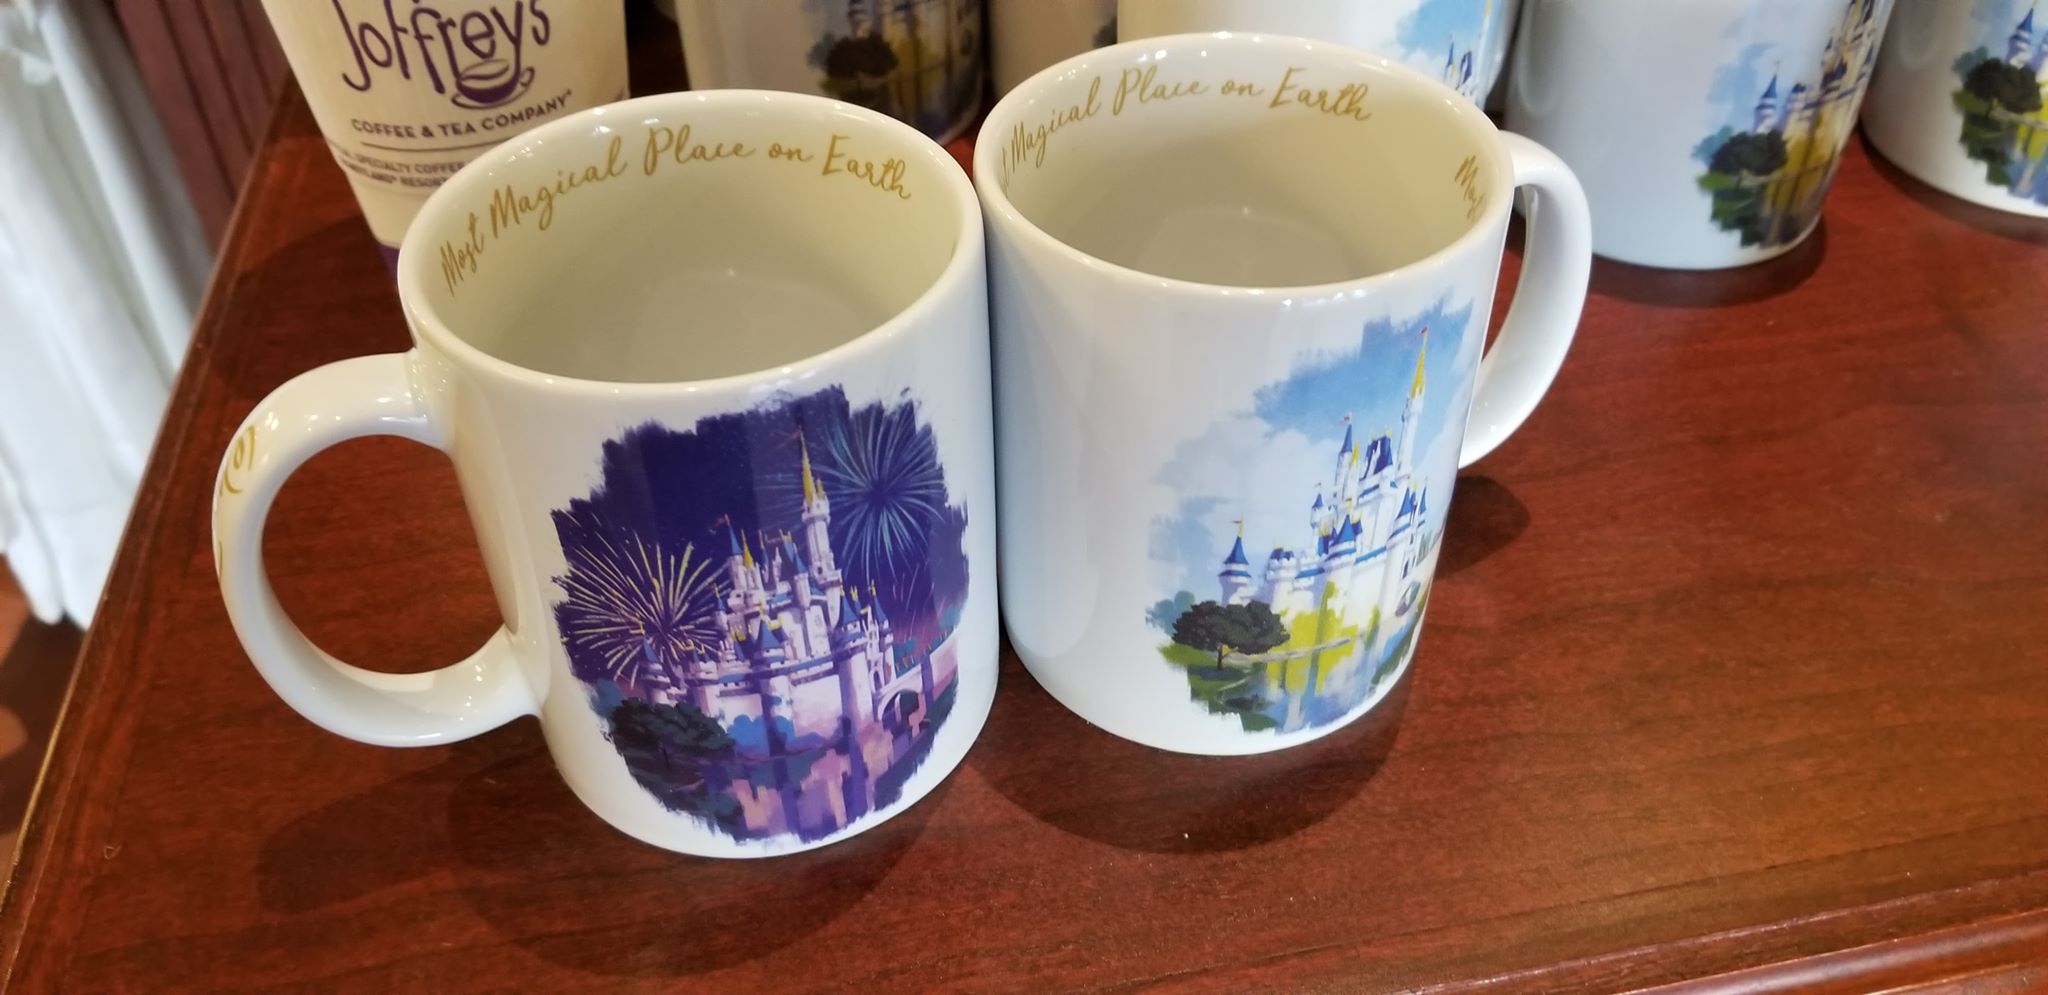 Dreams Come True With The New Disney Castle Merchandise